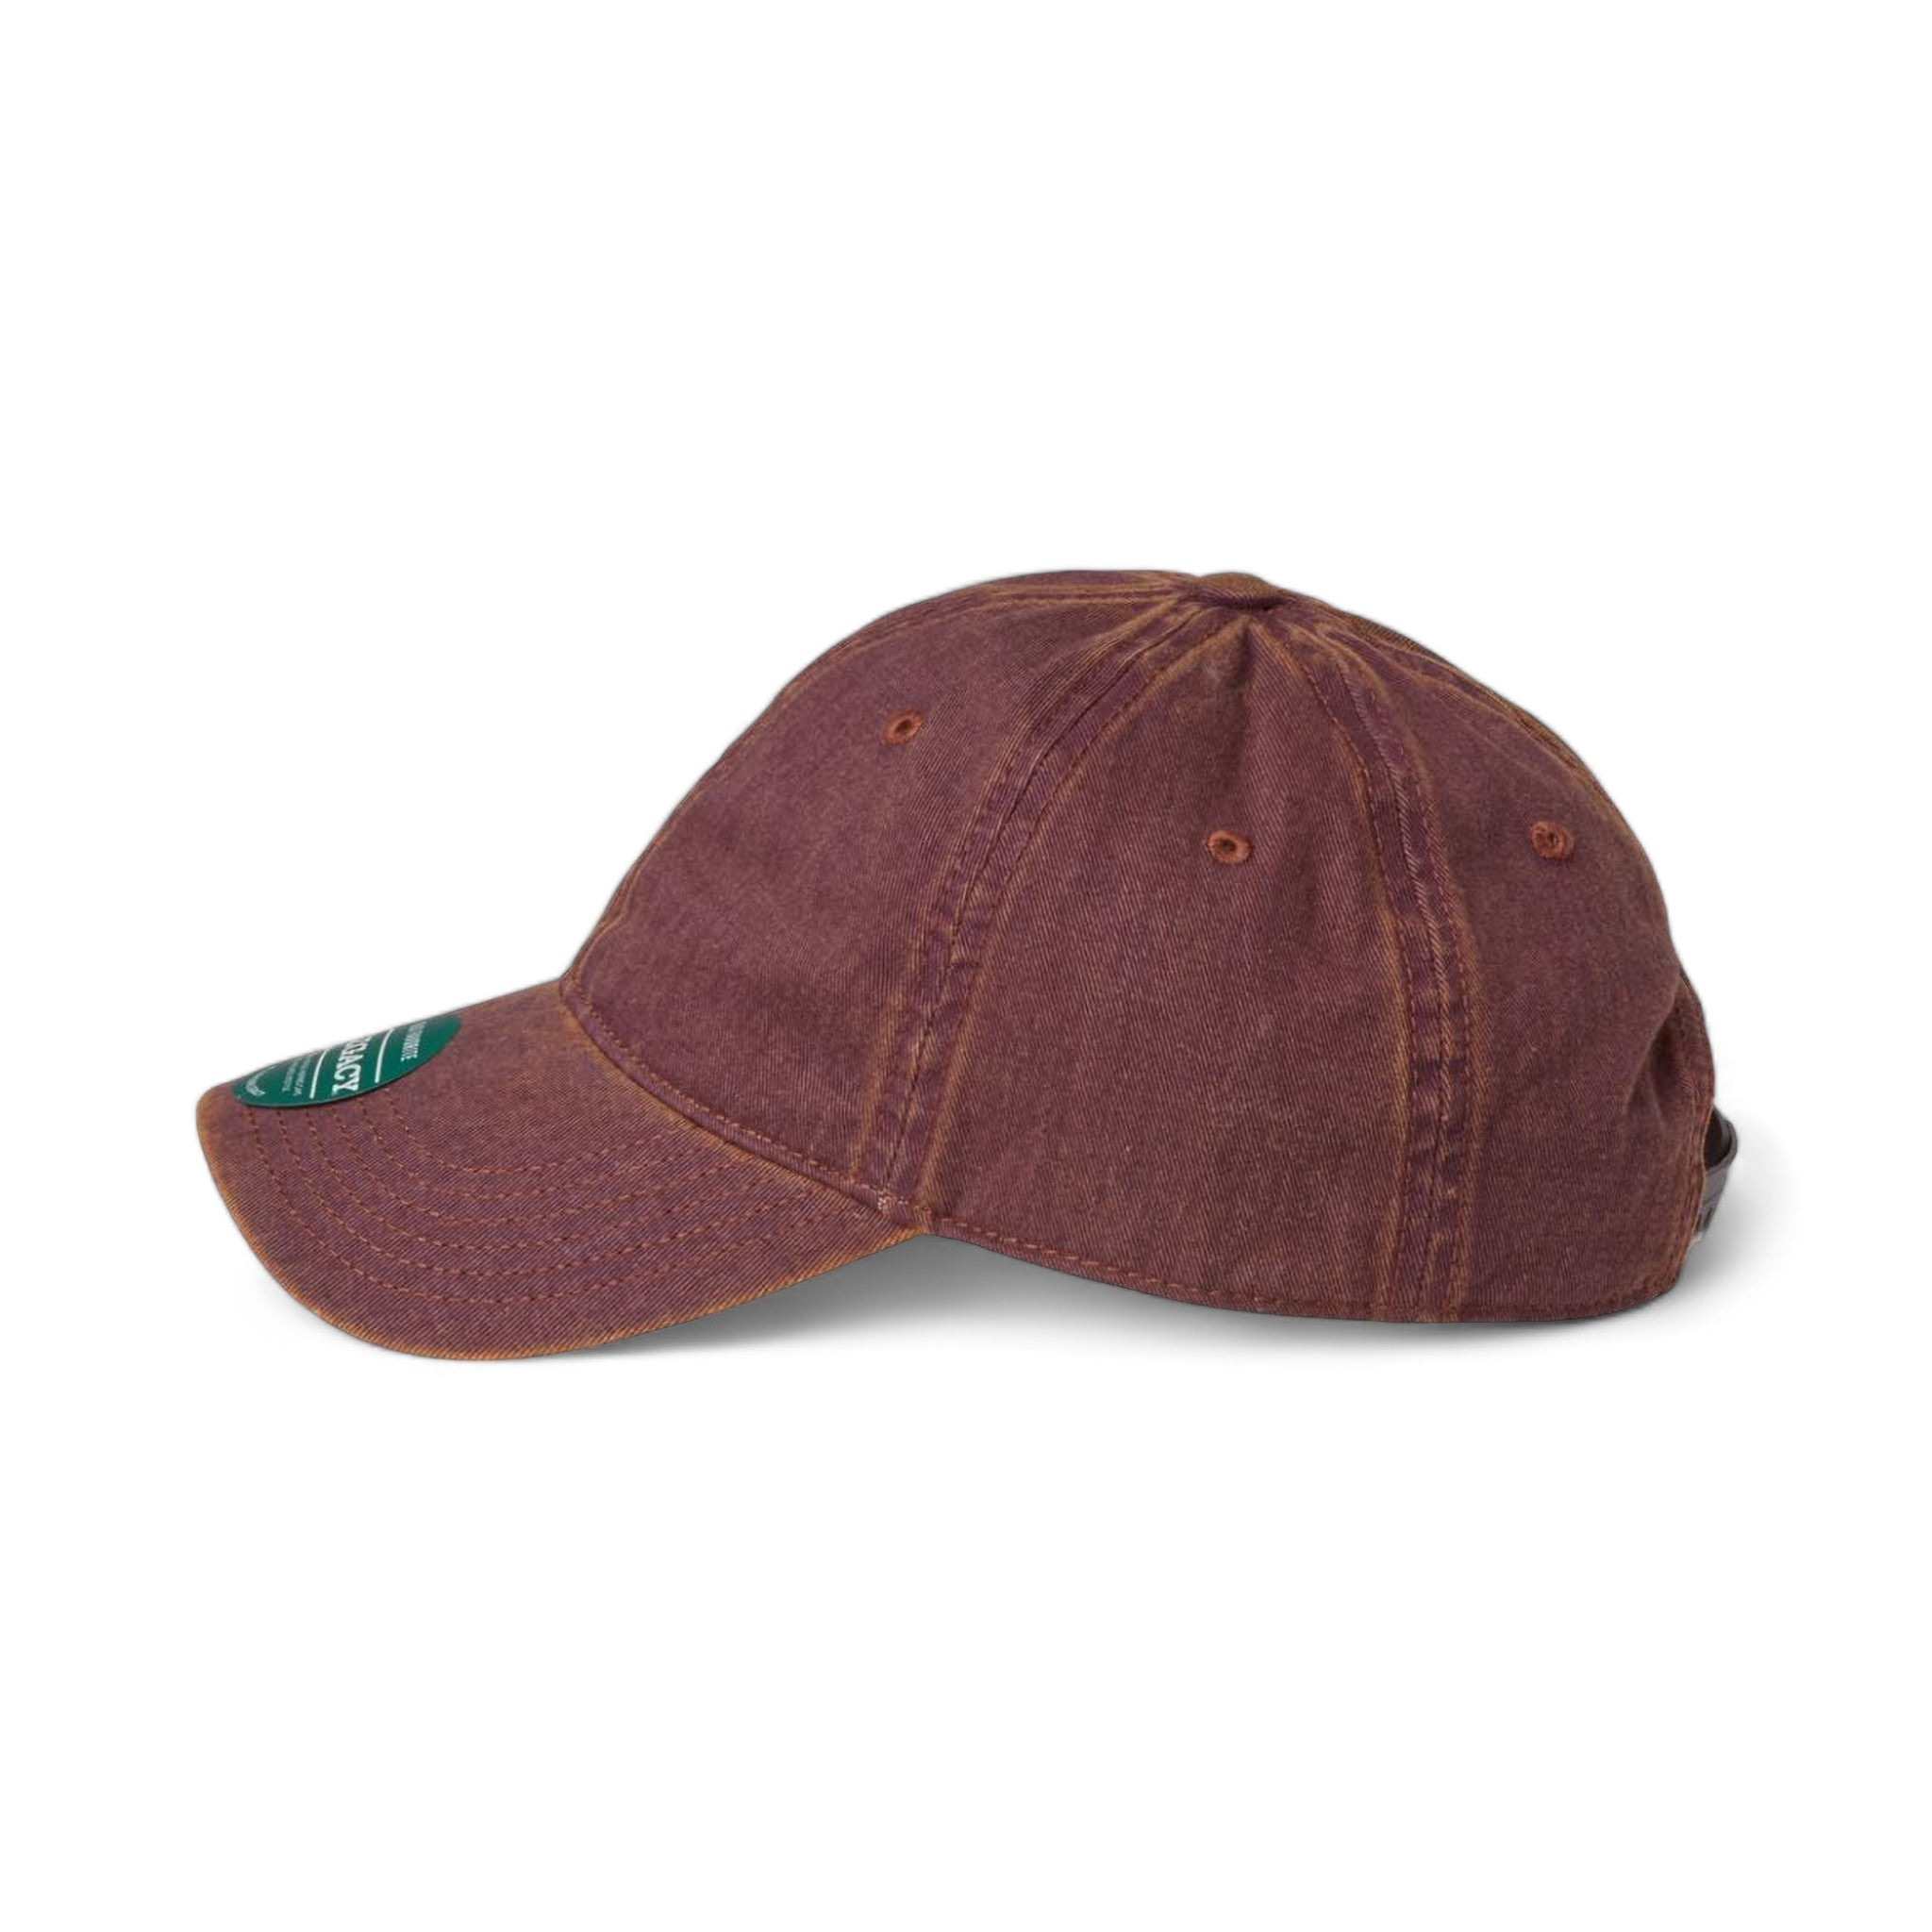 Side view of LEGACY OFAST custom hat in burgundy